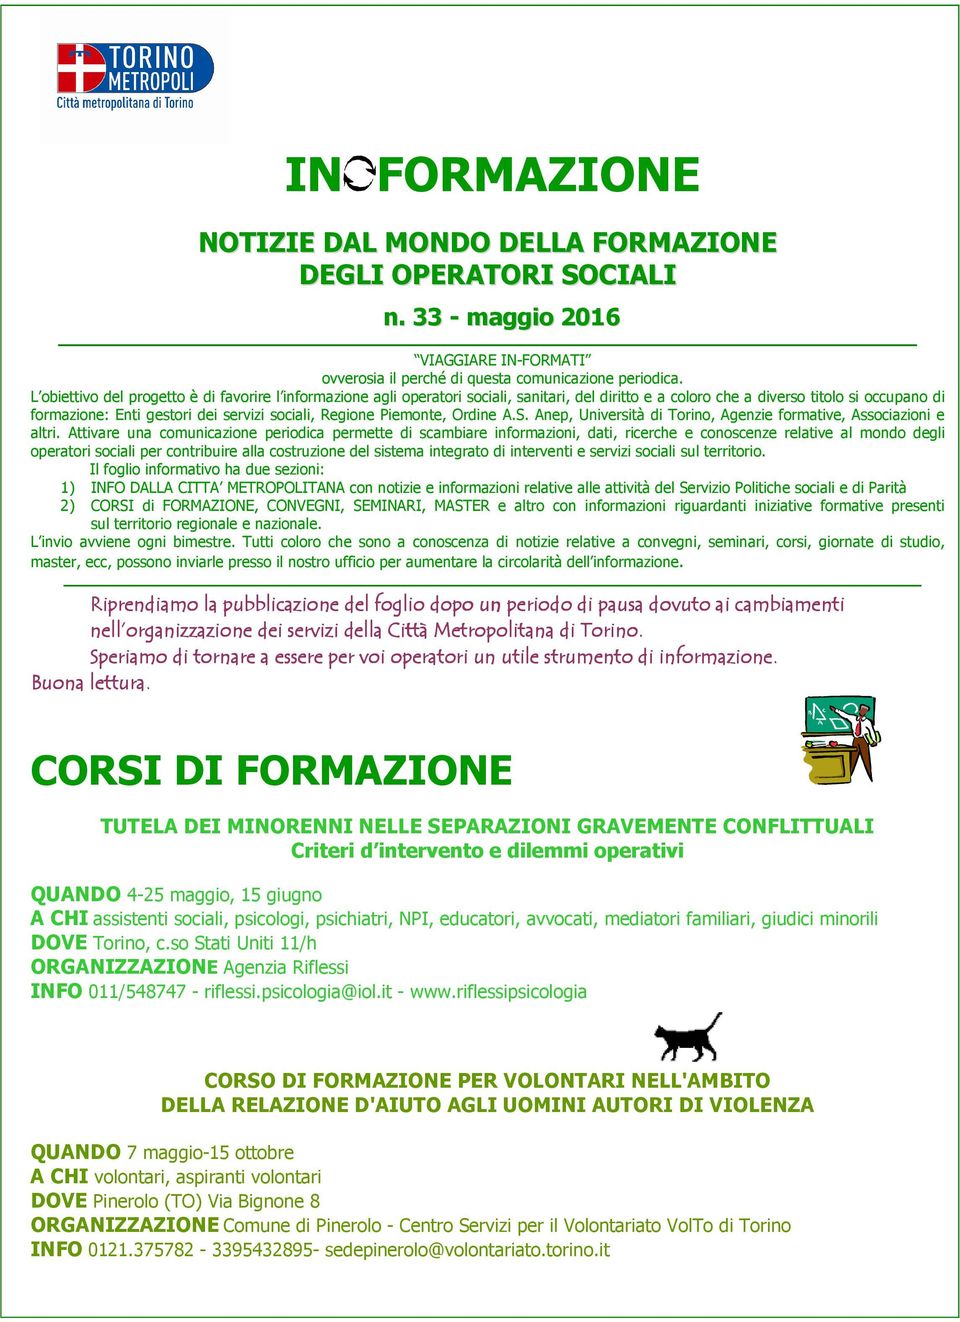 Regione Piemonte, Ordine A.S. Anep, Università di Torino, Agenzie formative, Associazioni e altri.